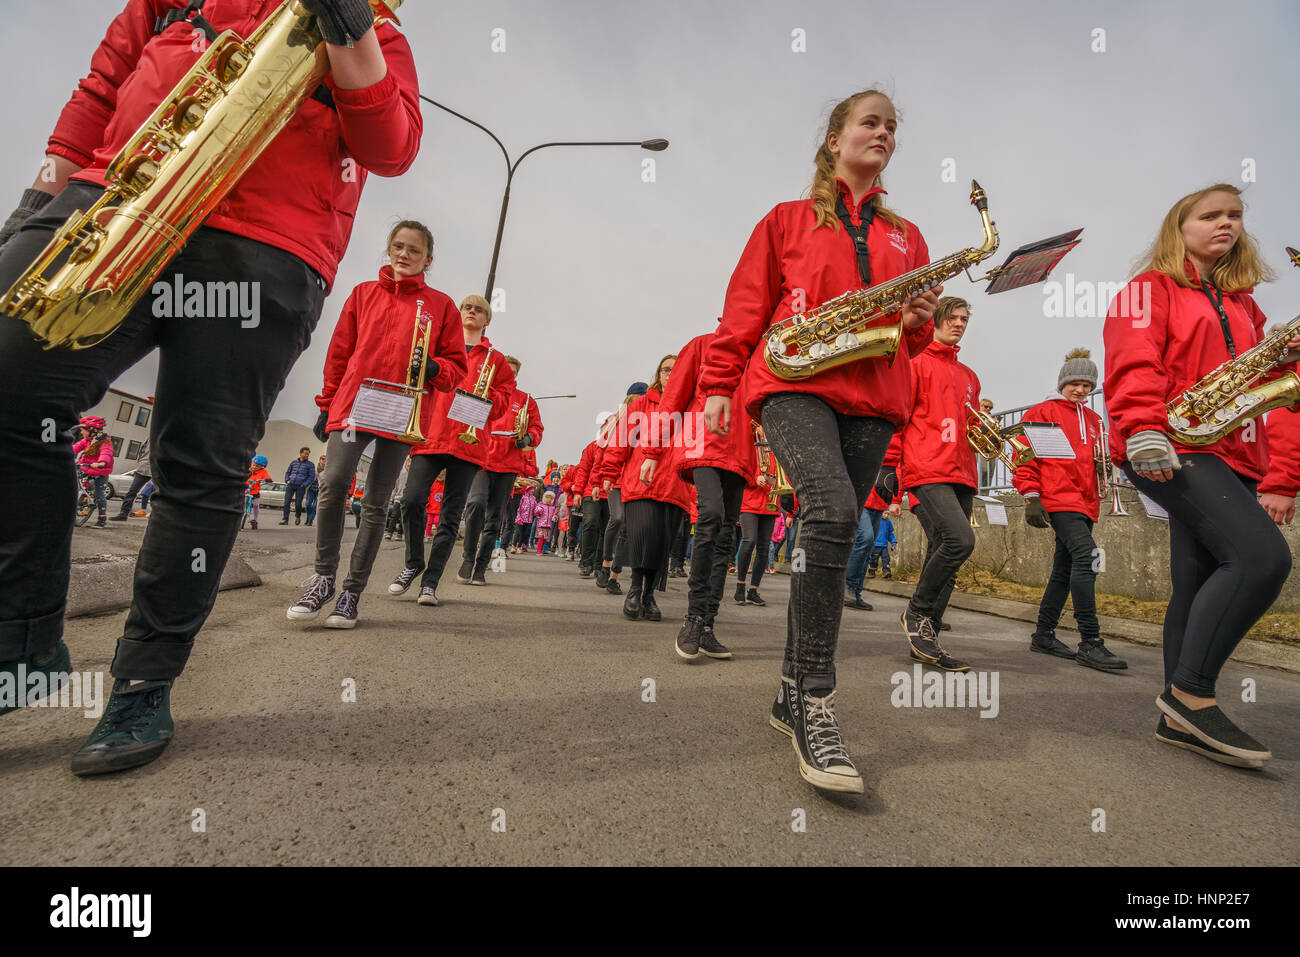 Marching band, Children's Cultural Festival, Reykjavik, Iceland Stock Photo